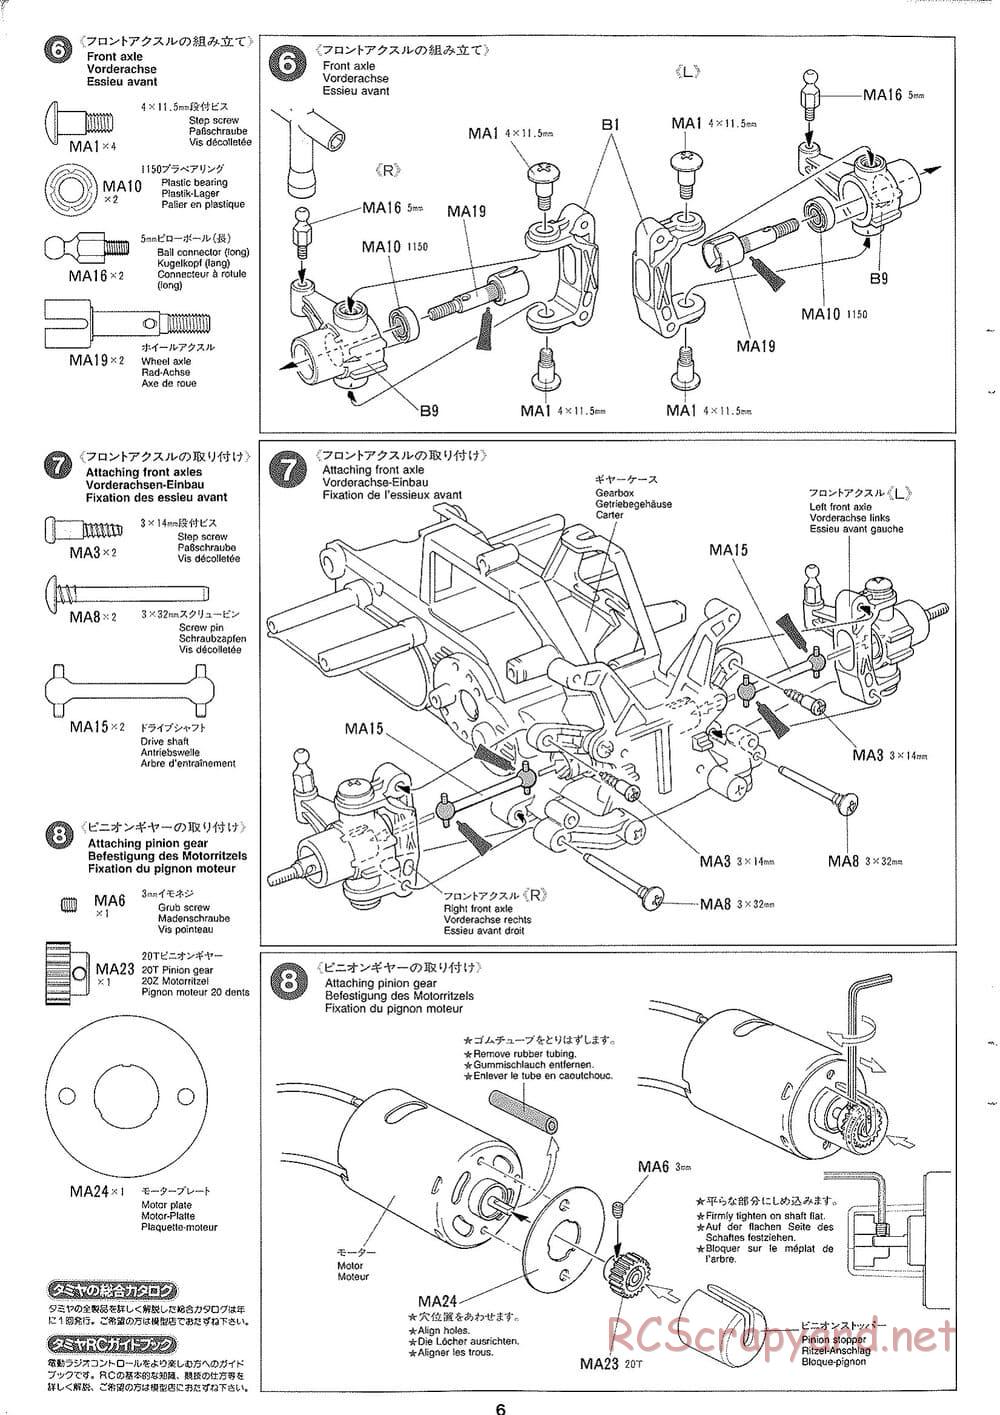 Tamiya - Rover Mini Cooper Racing - M03 Chassis - Manual - Page 6